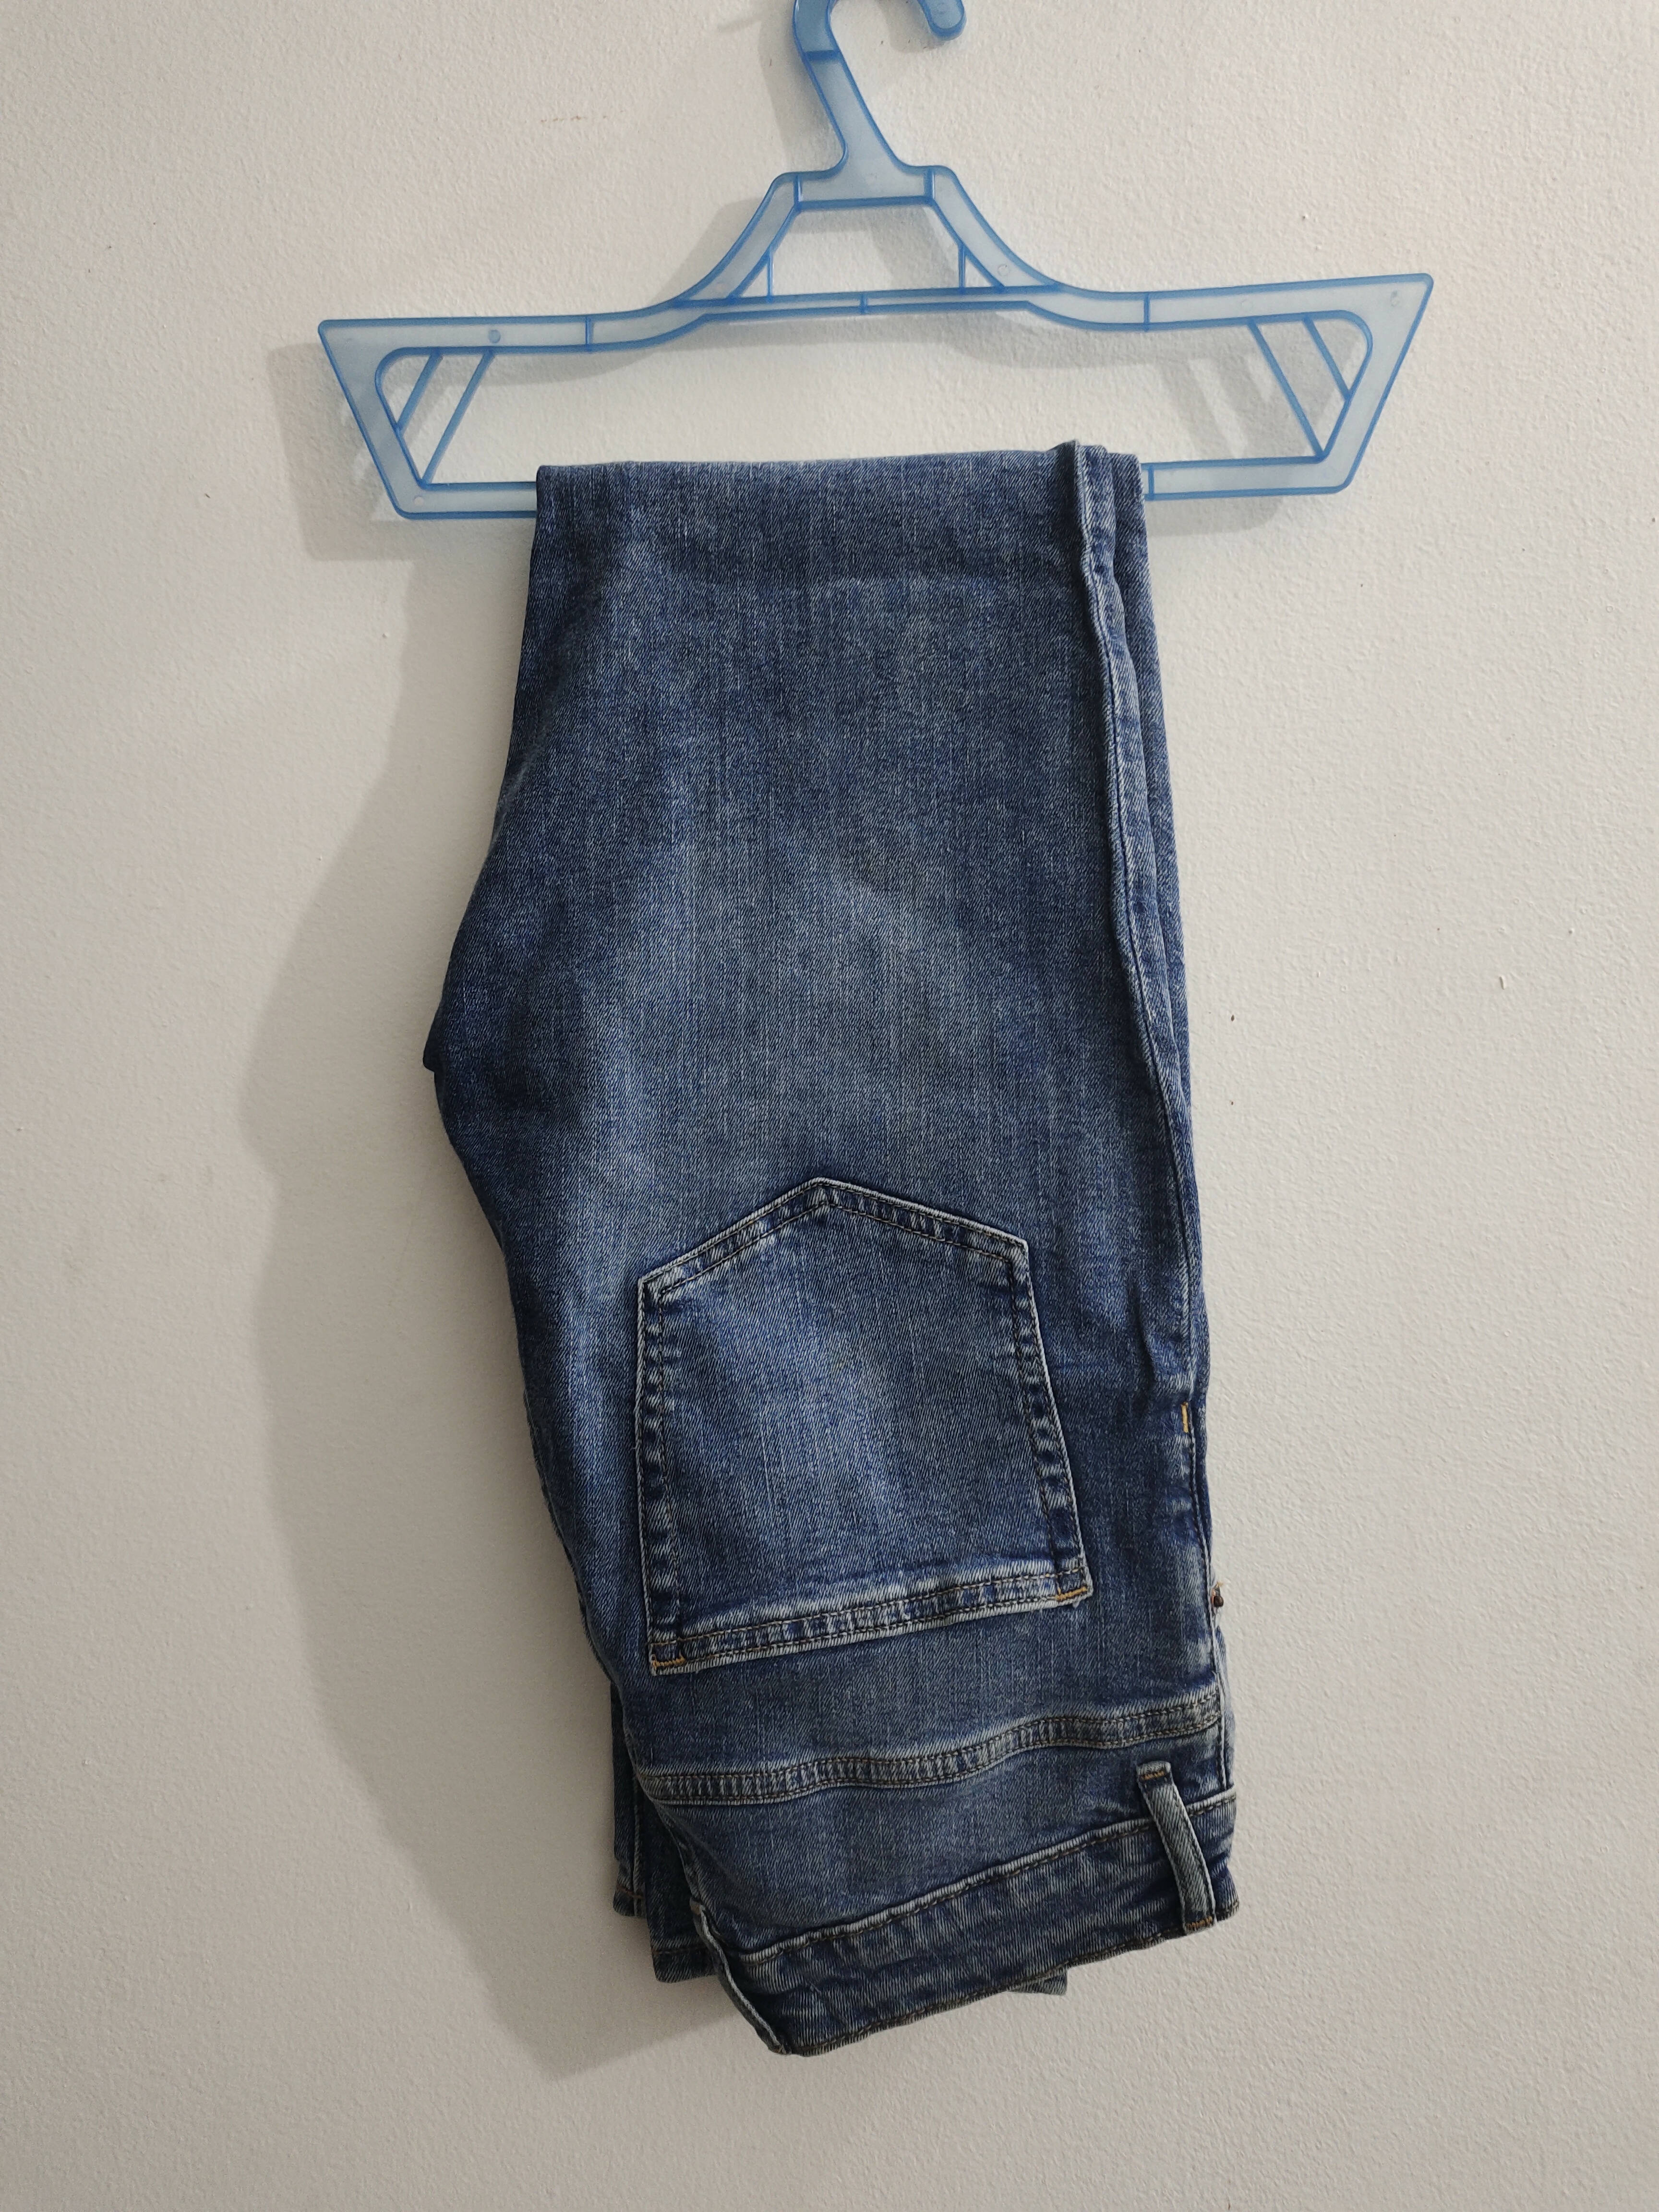 Demin | Blue jeans (Size: S ) | Women Bottoms & Pants | Worn Once